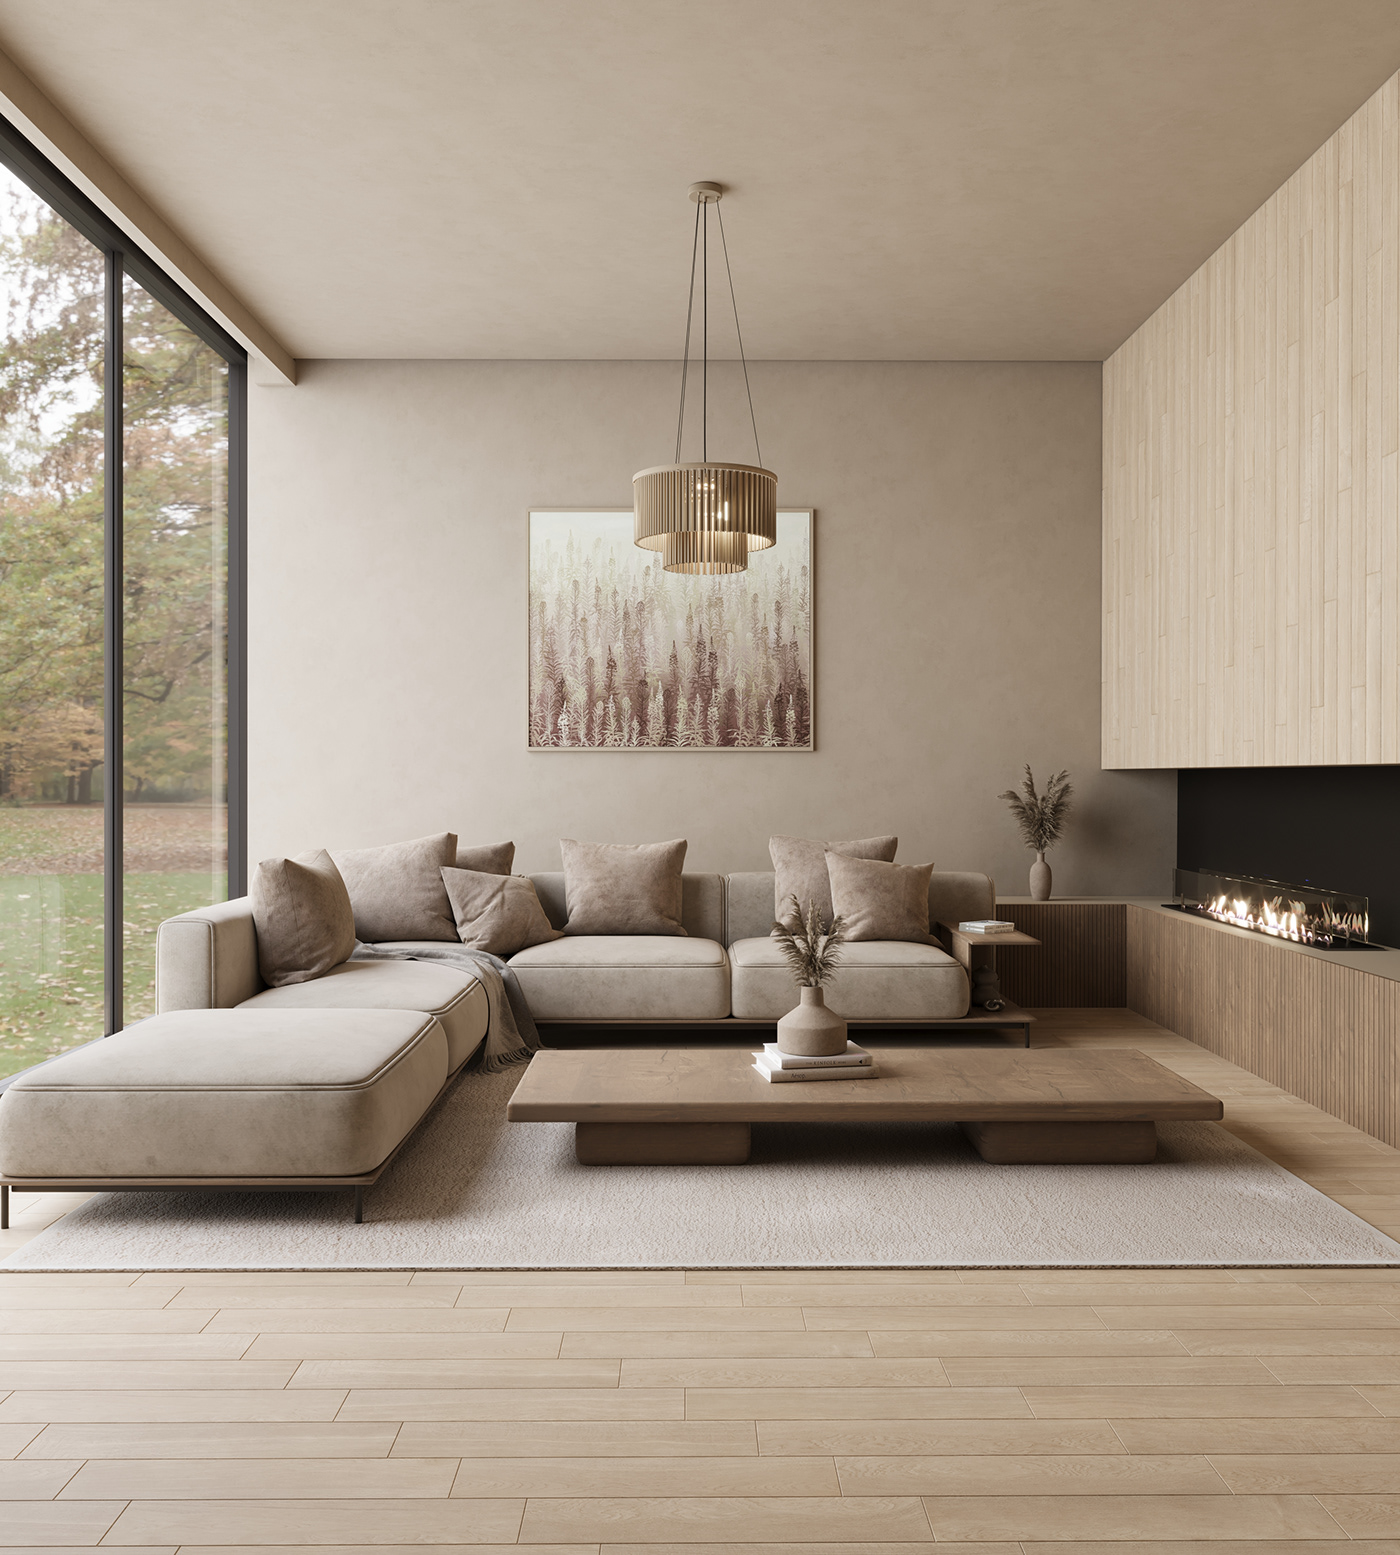 indoor interior design  Render archviz visualization 3ds max corona architecture